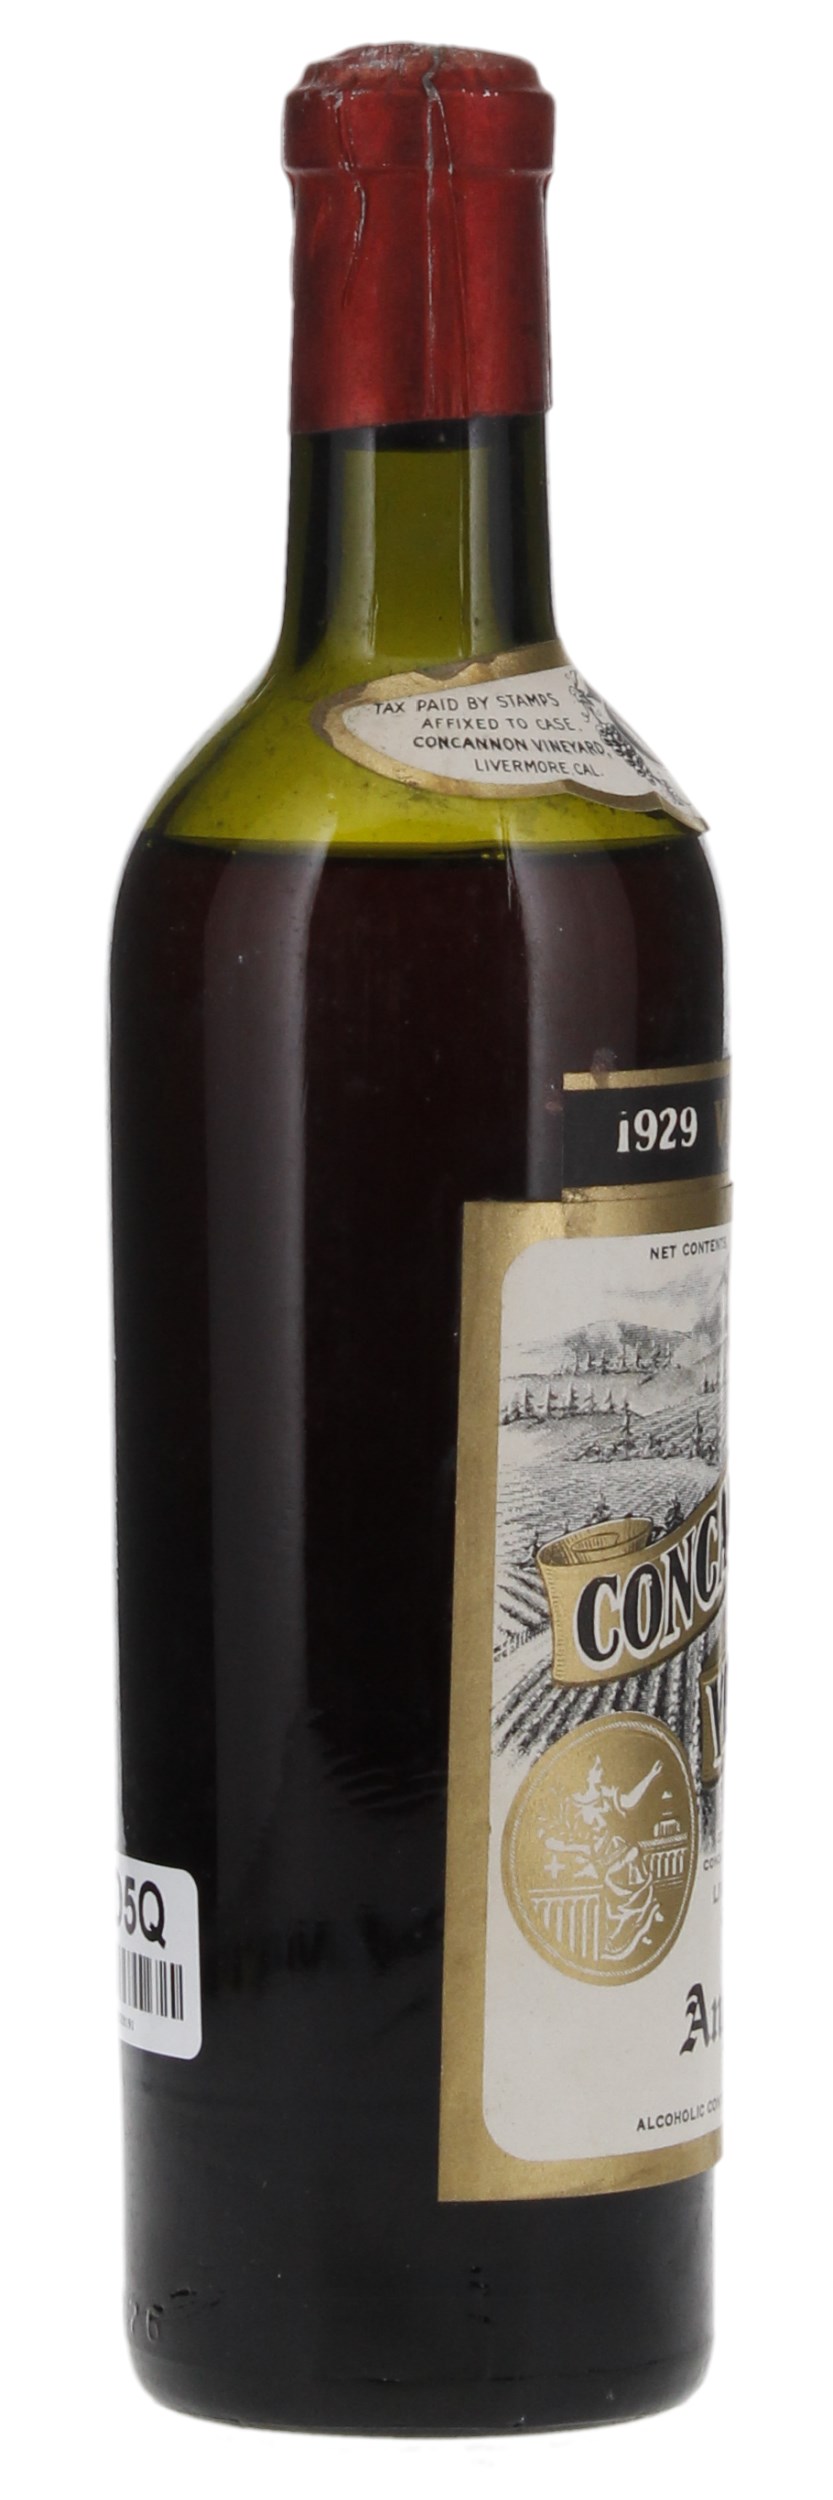 1929 Concannon Angelica, 375ml